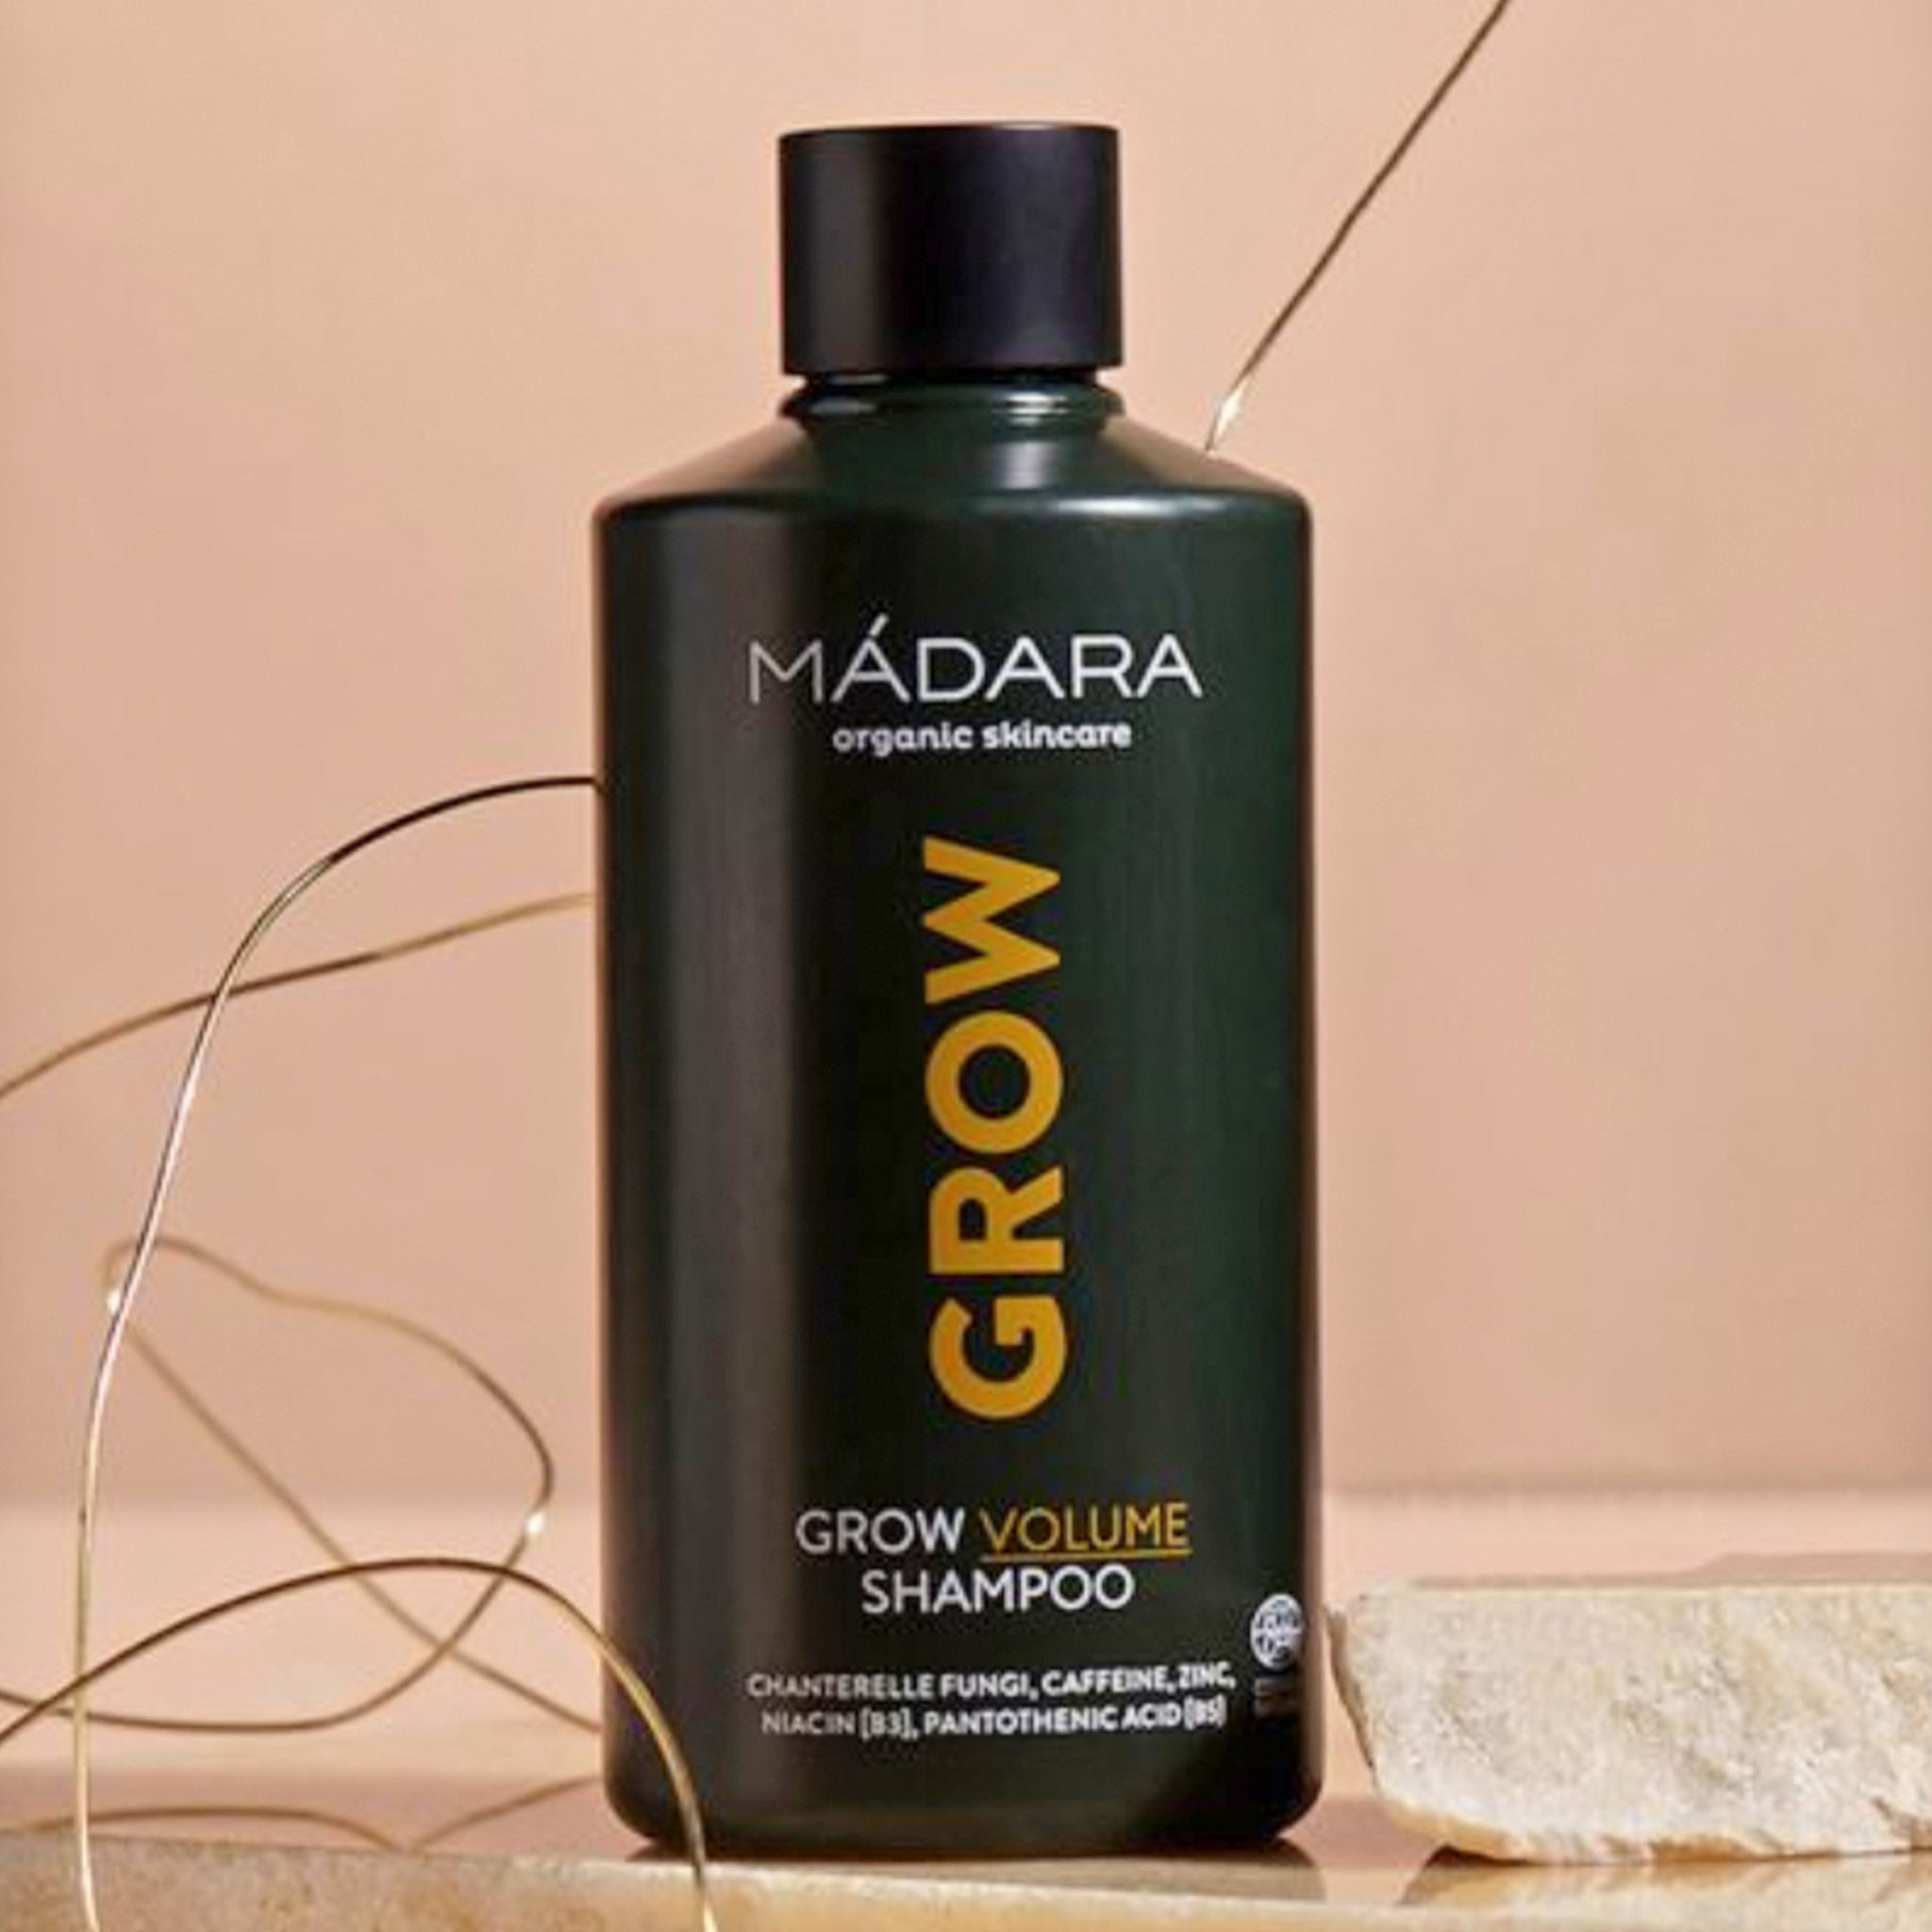 Grow Volume Shampoo - mypure.co.uk